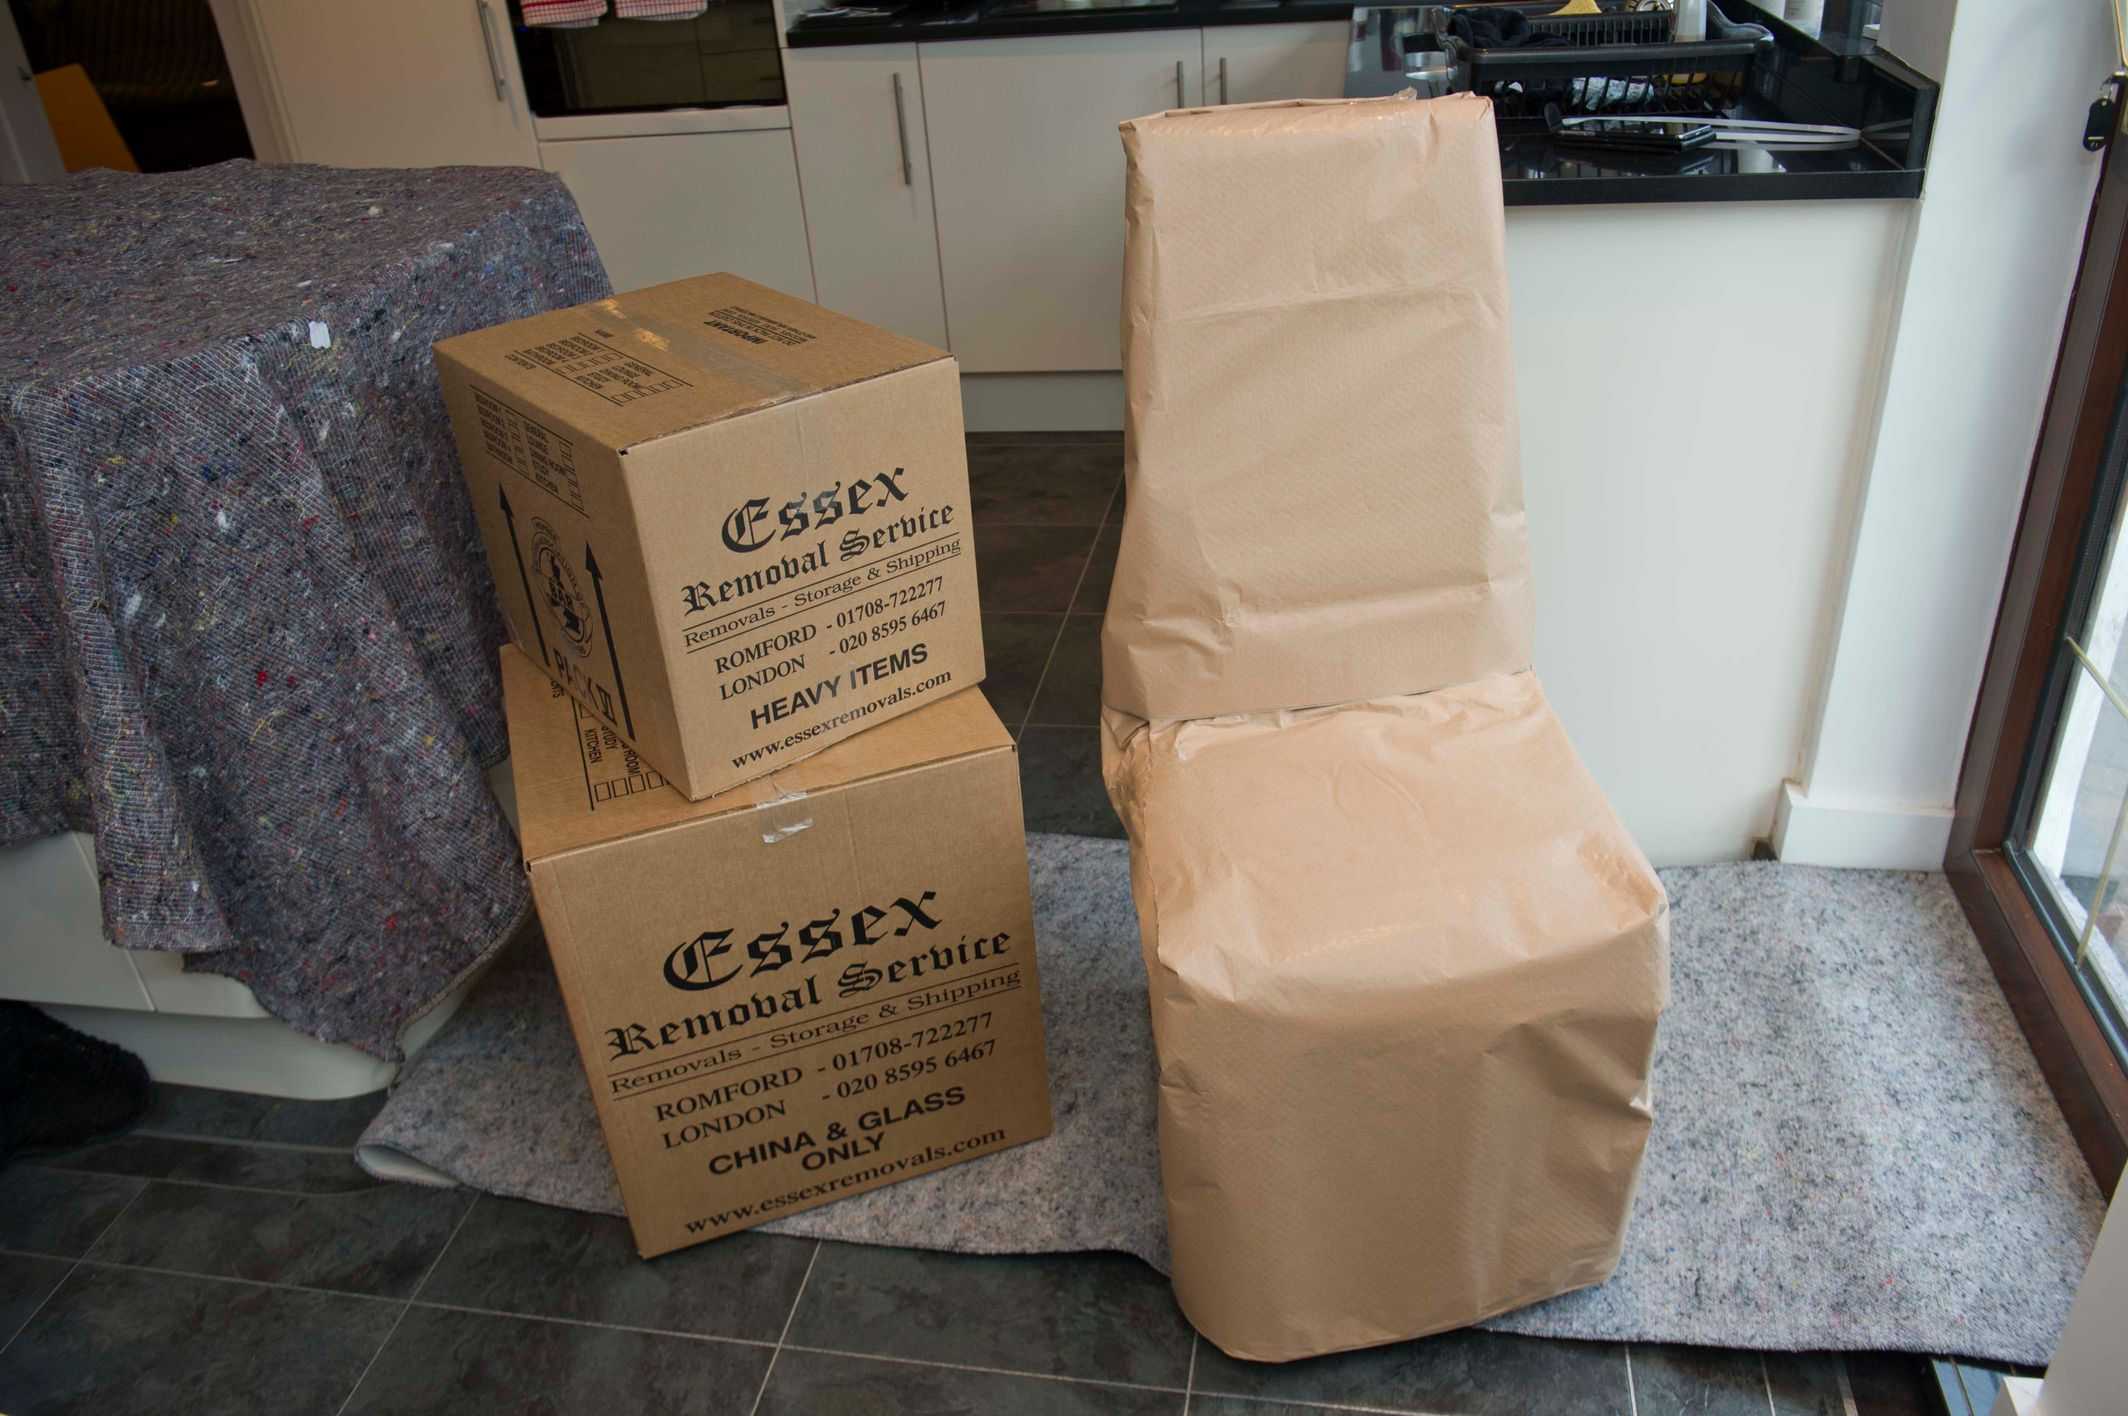 Essex Removals cartons